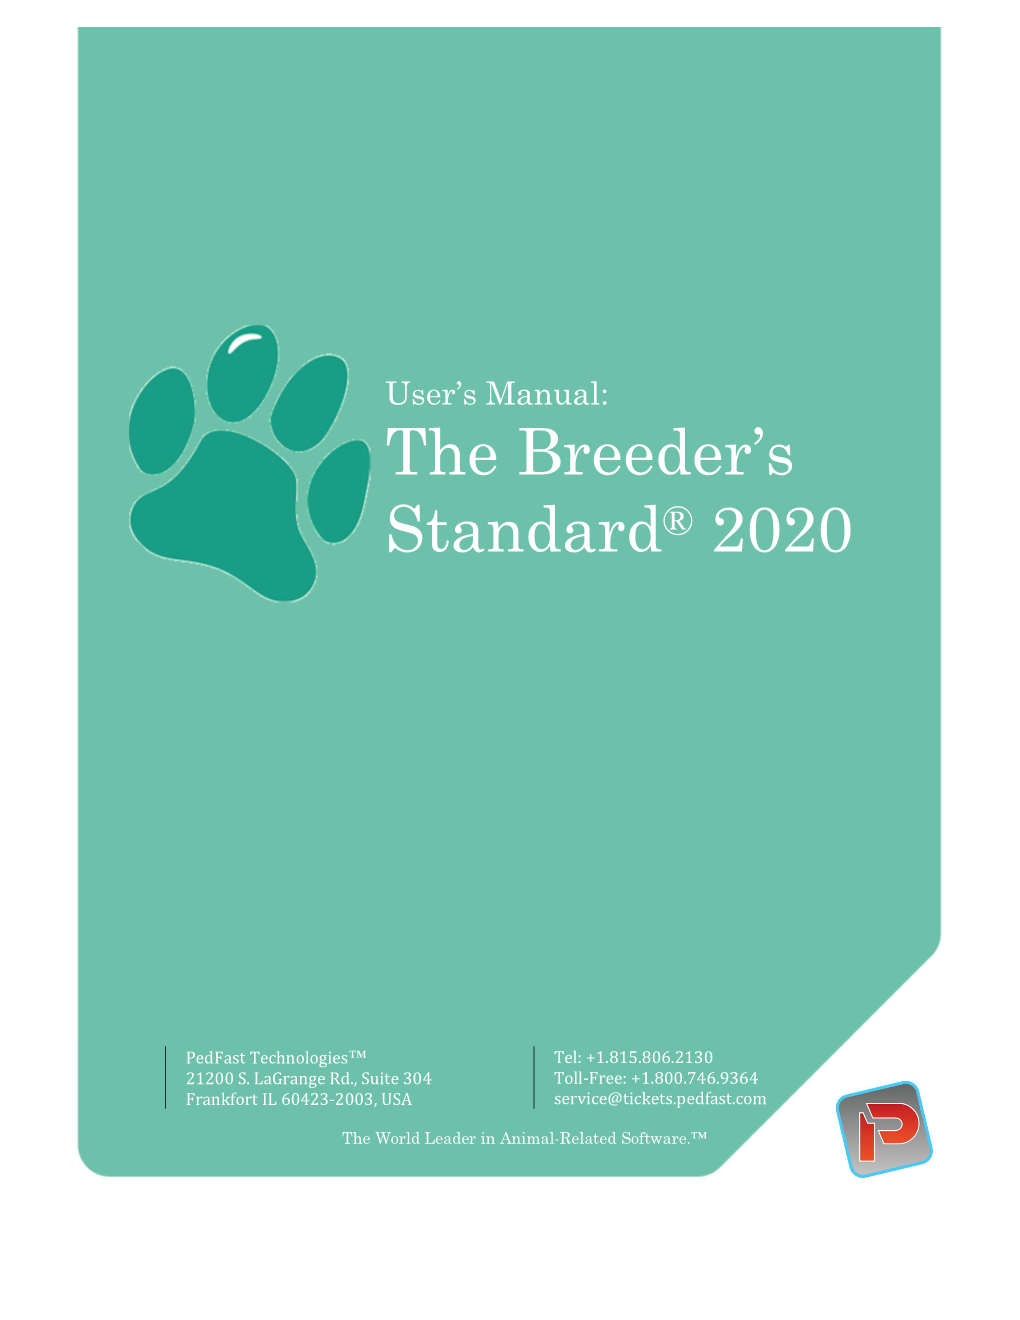 The Breeder's Standard® 2020 User Manual